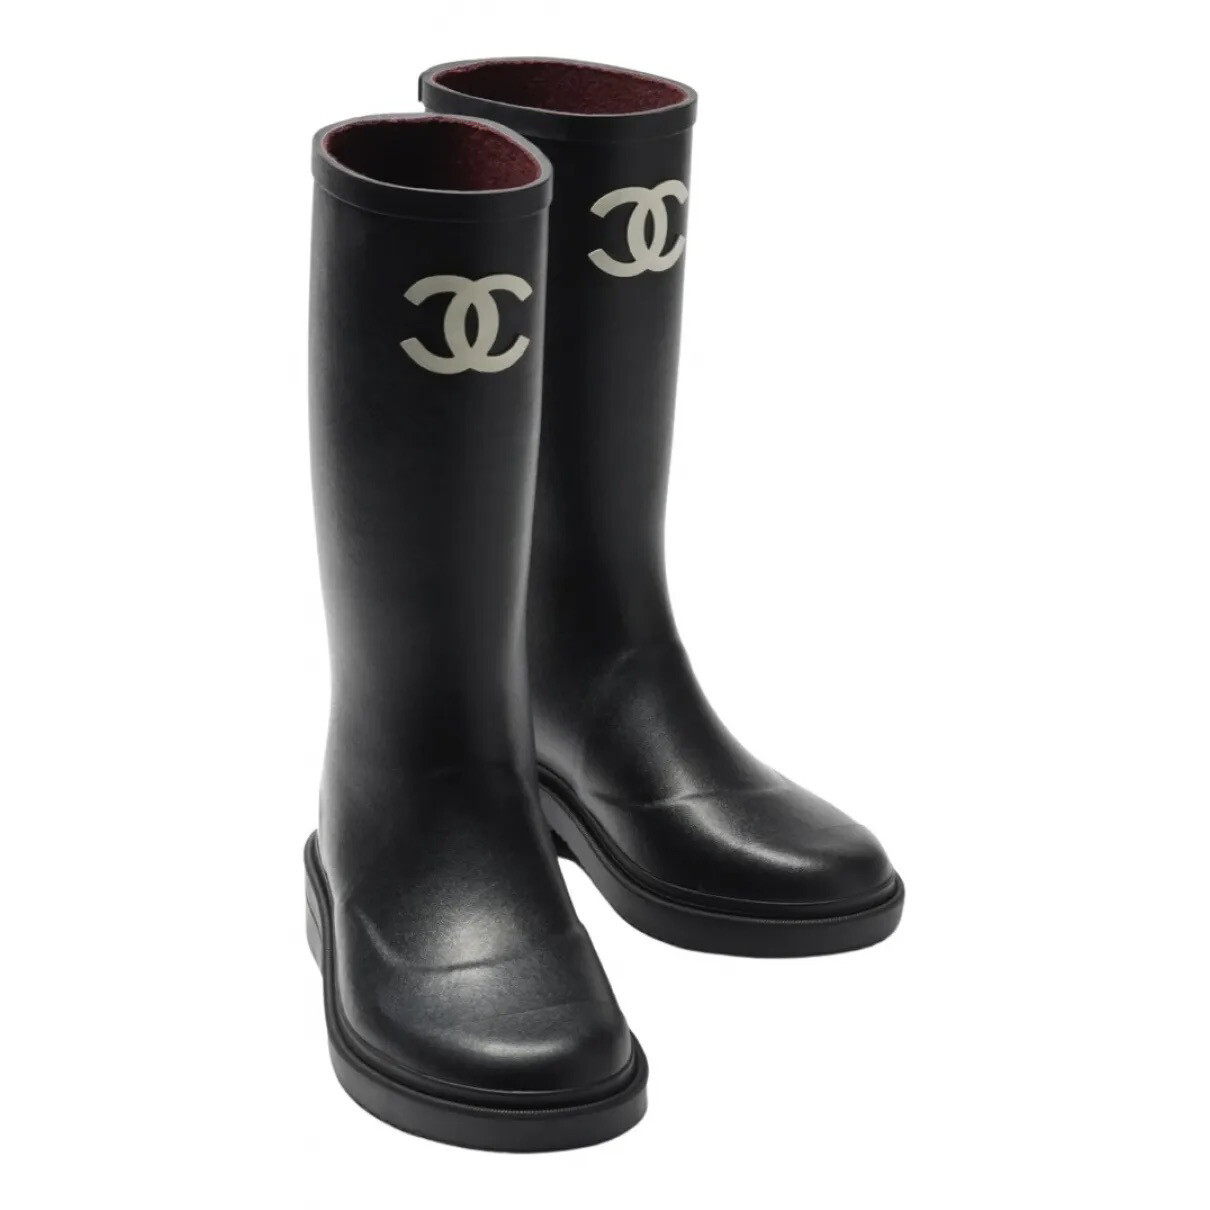 Chanel Rain Boots Wellies, Size 42 Black And White, New In Box, WA001 ...